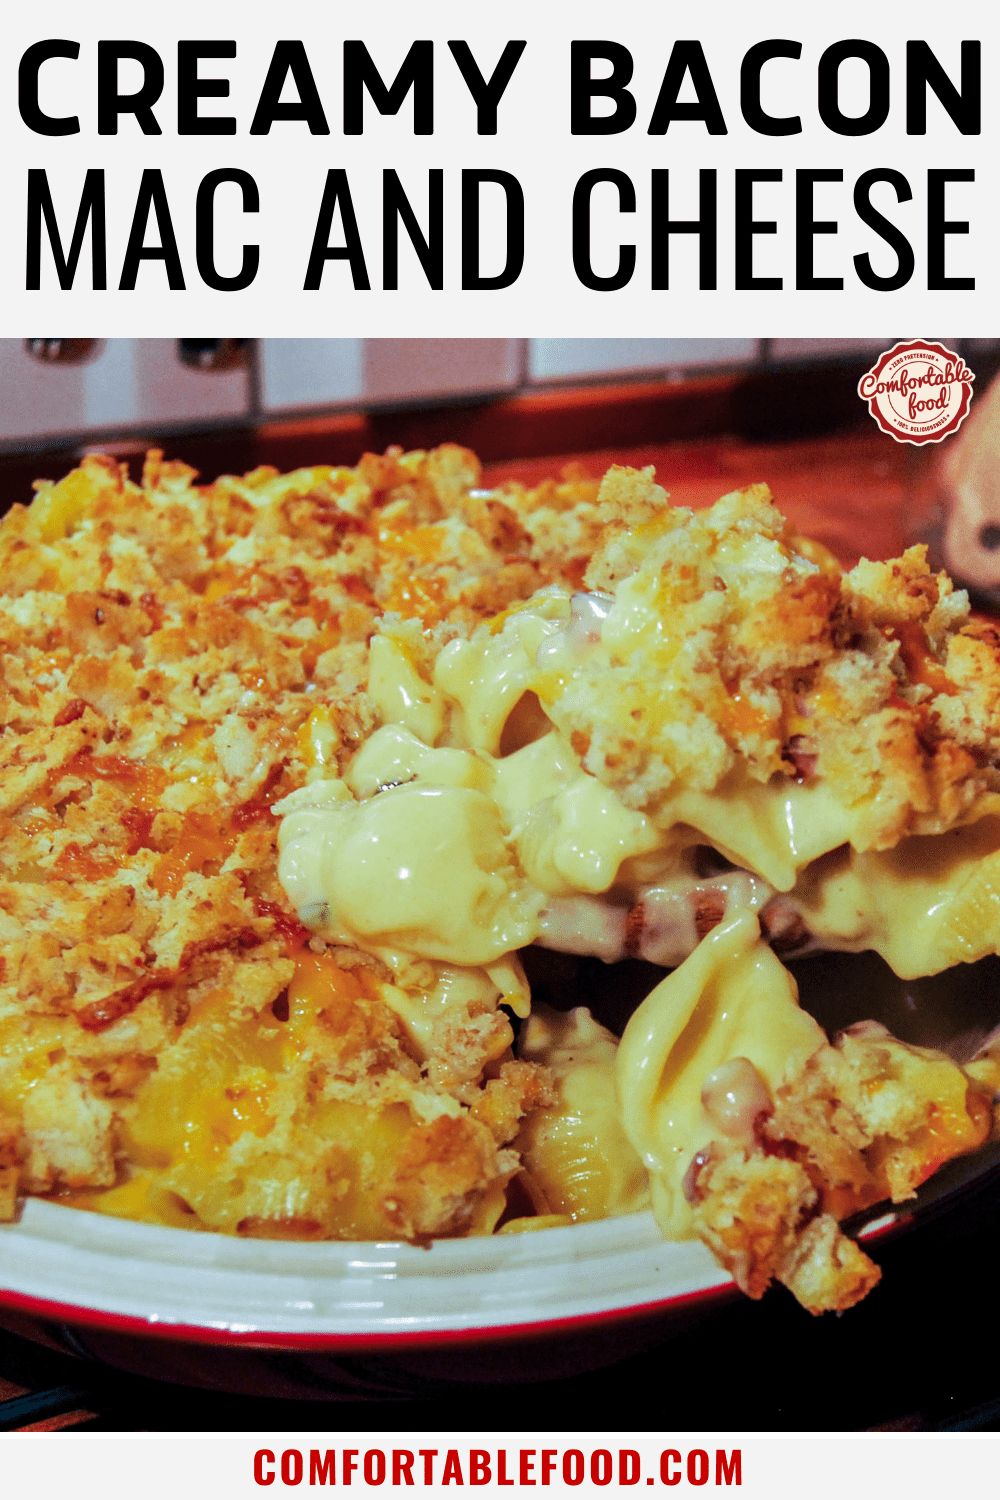 Creamy bacon mac and cheese